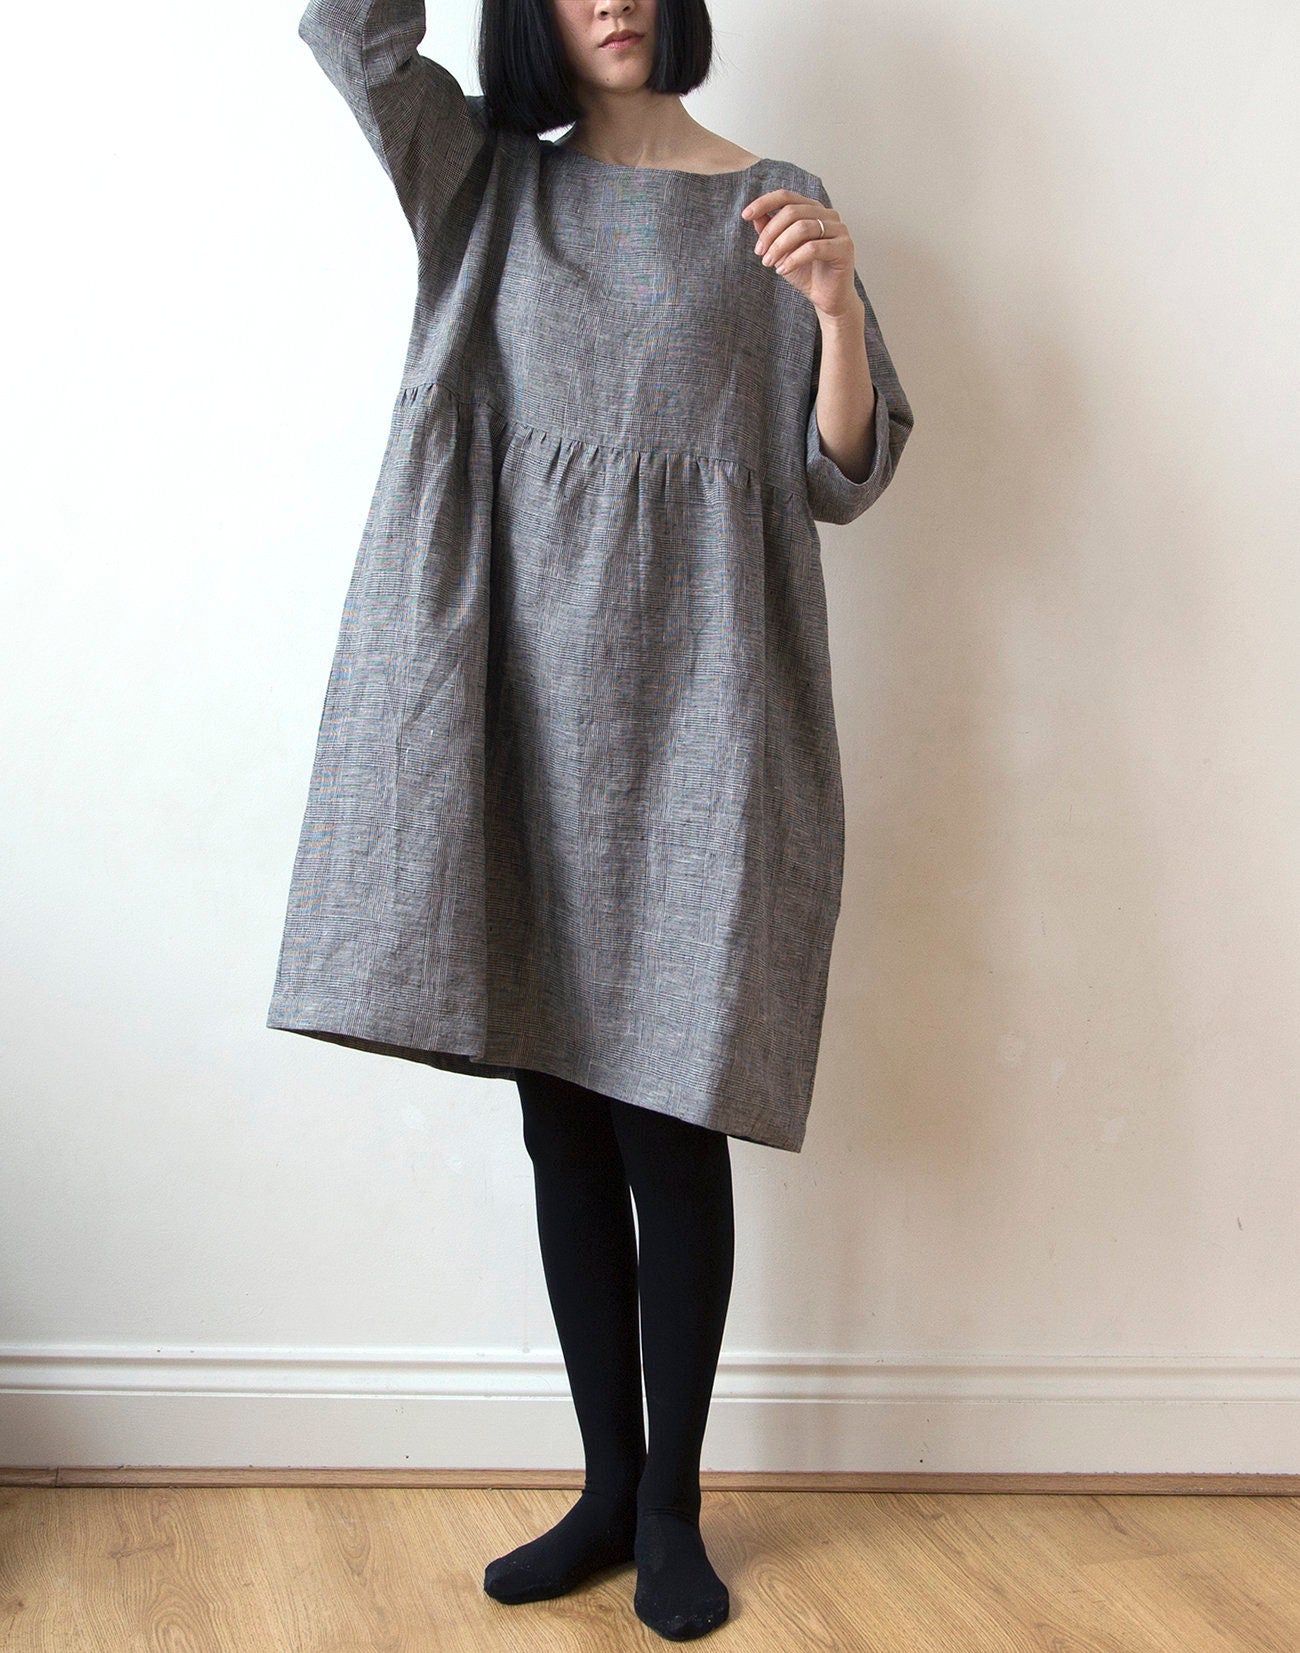 Grey glen check linen dress